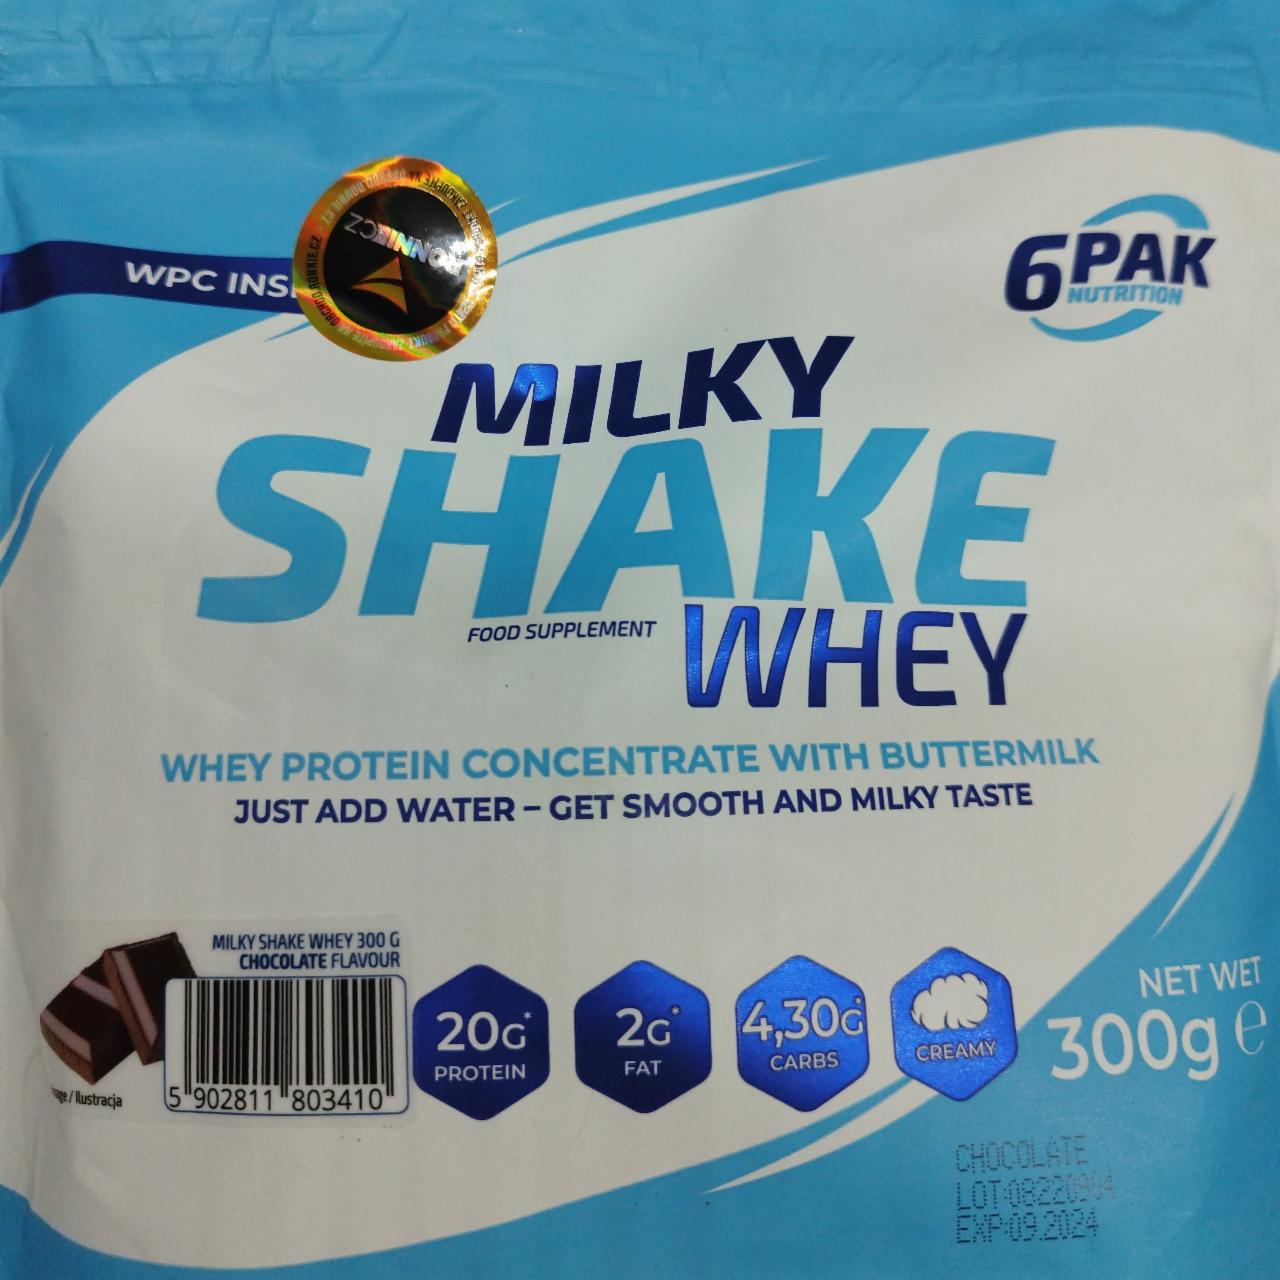 Fotografie - Milky Shake Whey Chocolate 6PAK Nutrition